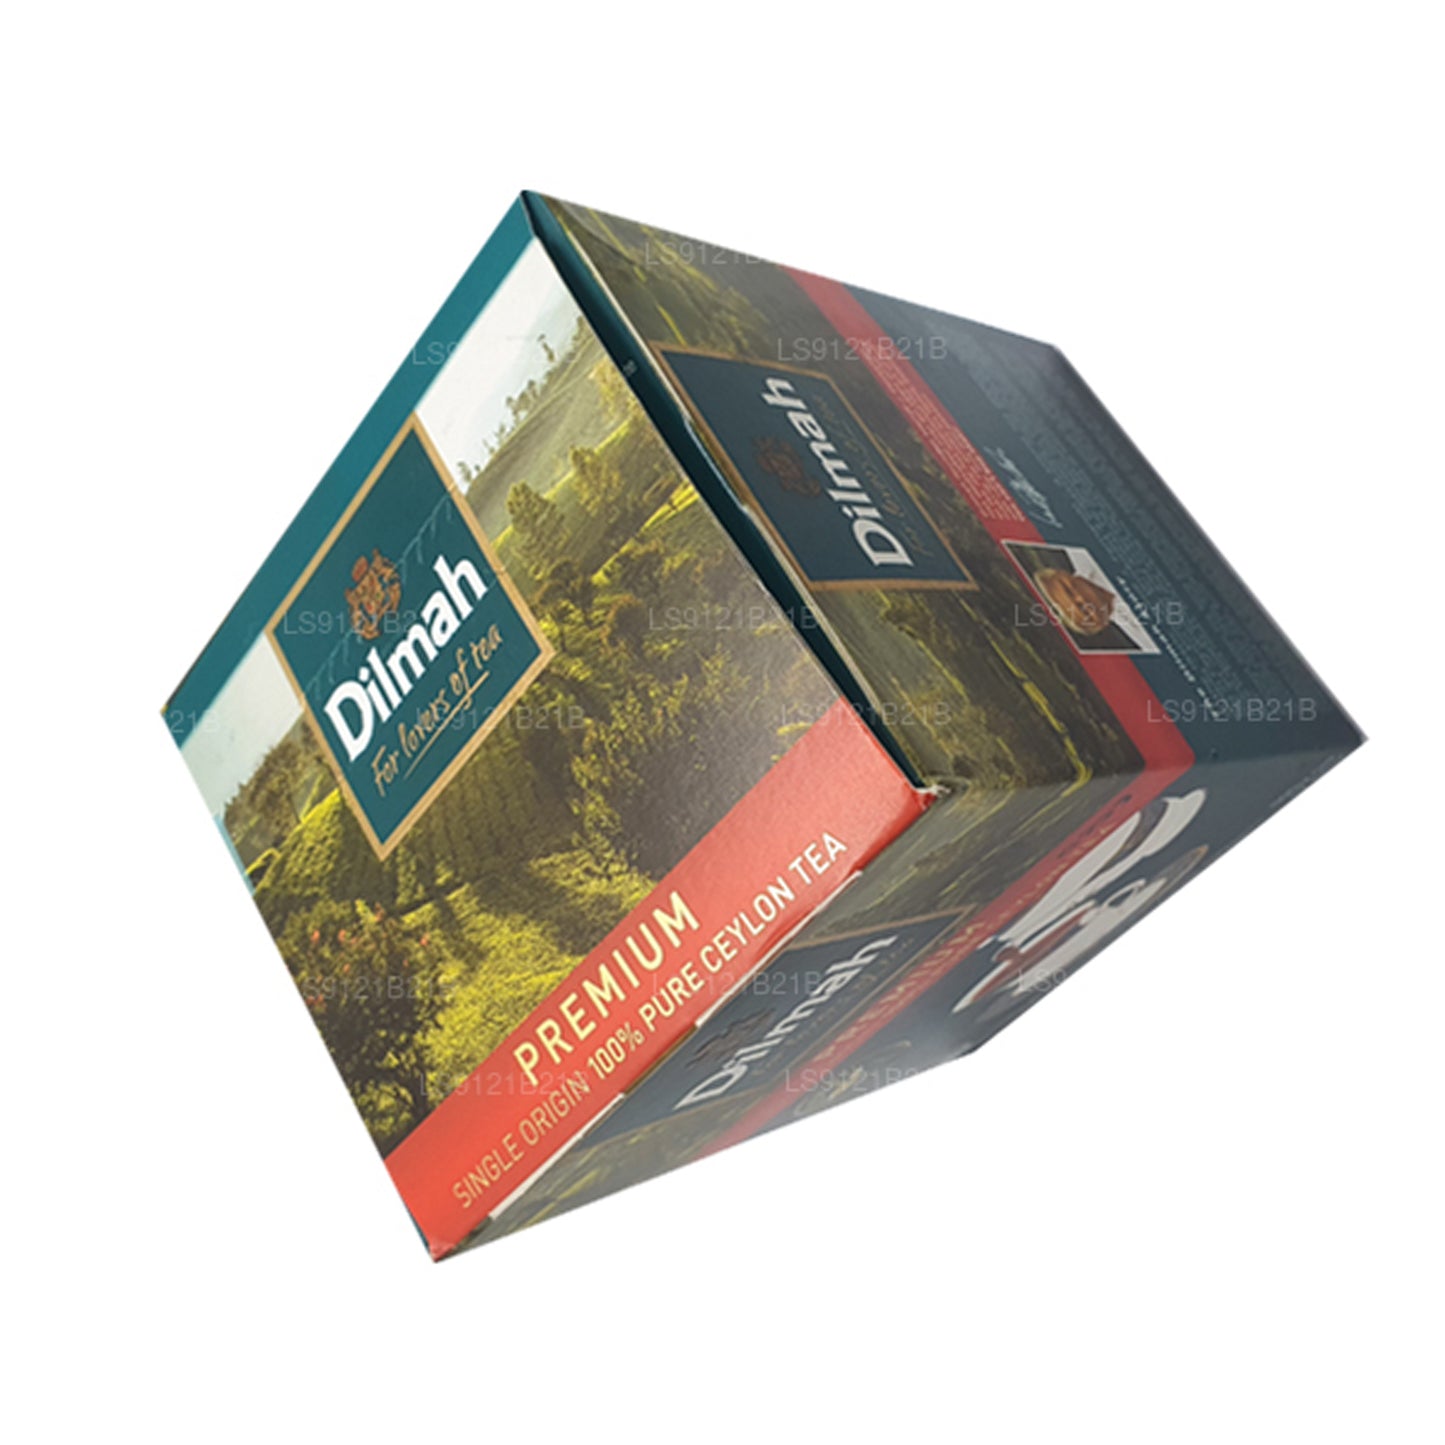 Dilmah Premium Ceylon Loseblatt-Tee (125 g)